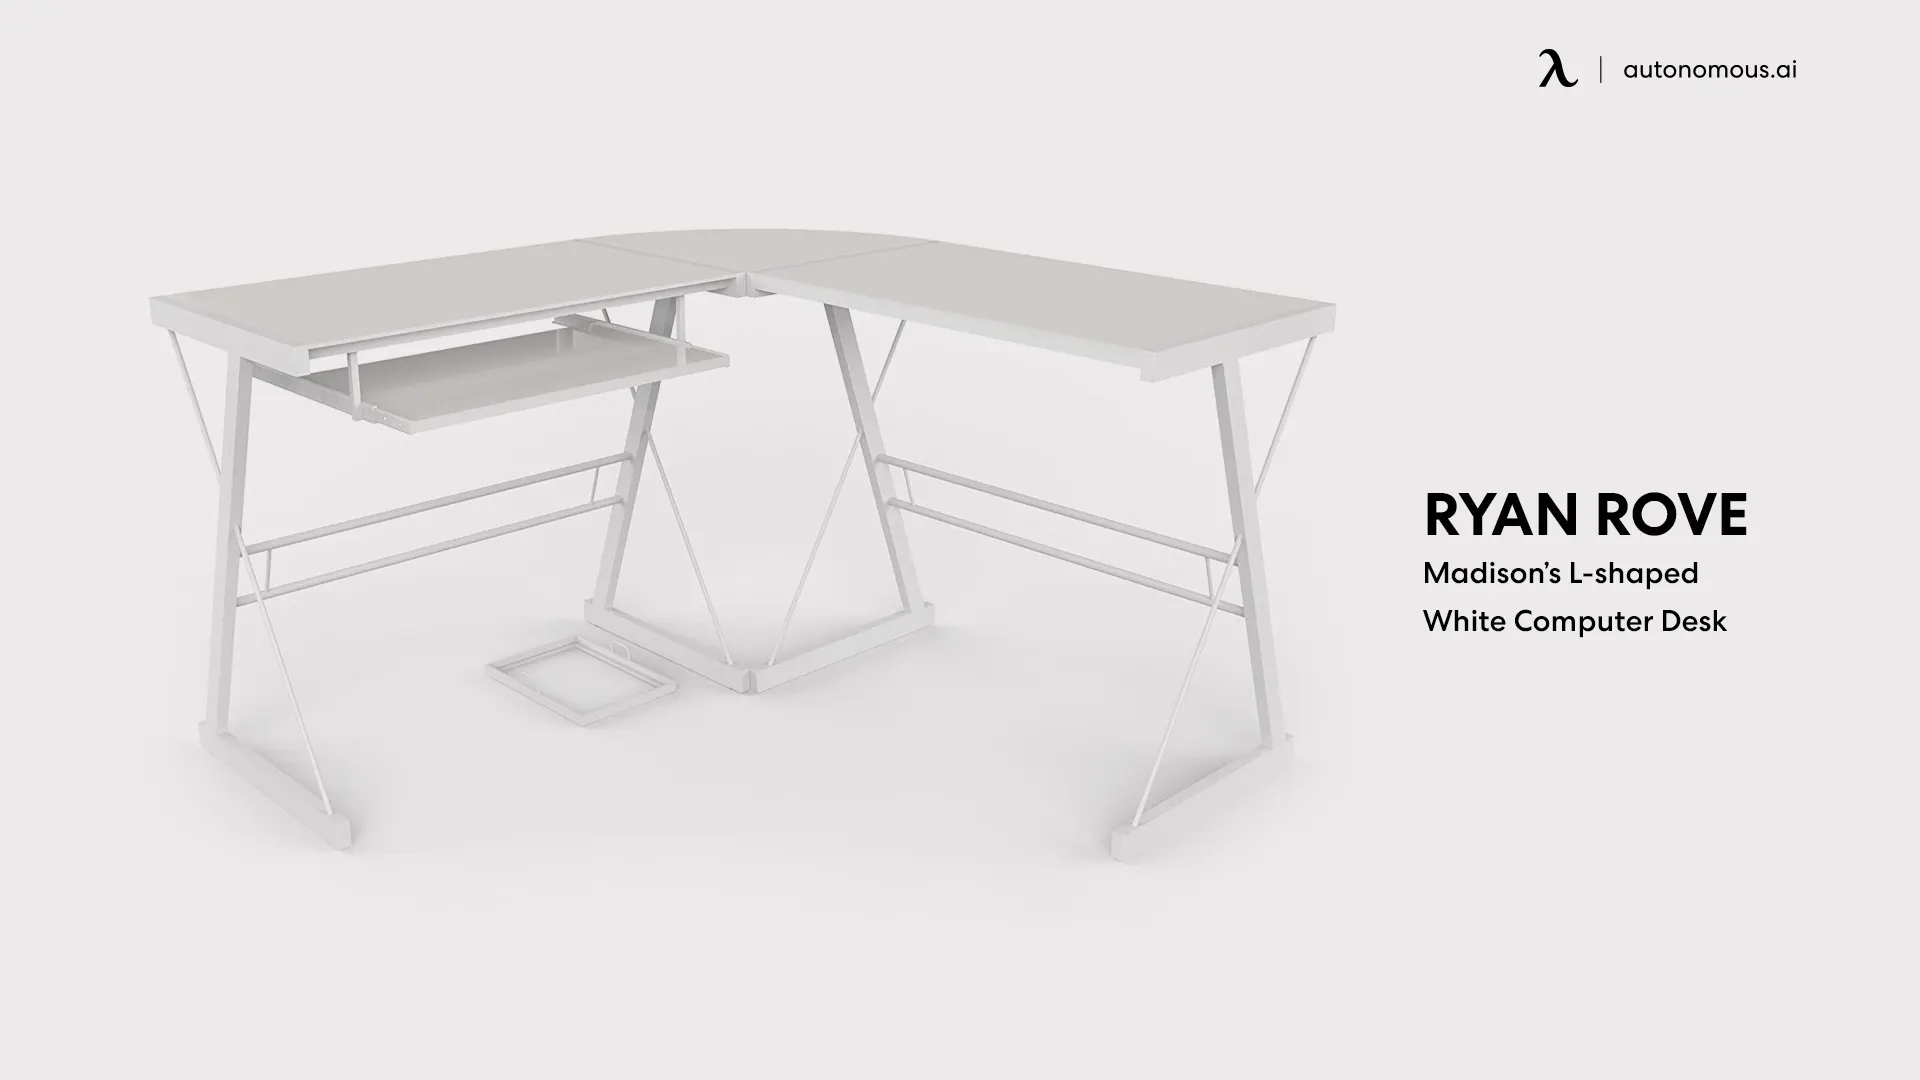 Ryan Rove Madison’s L-shaped White Computer Desk